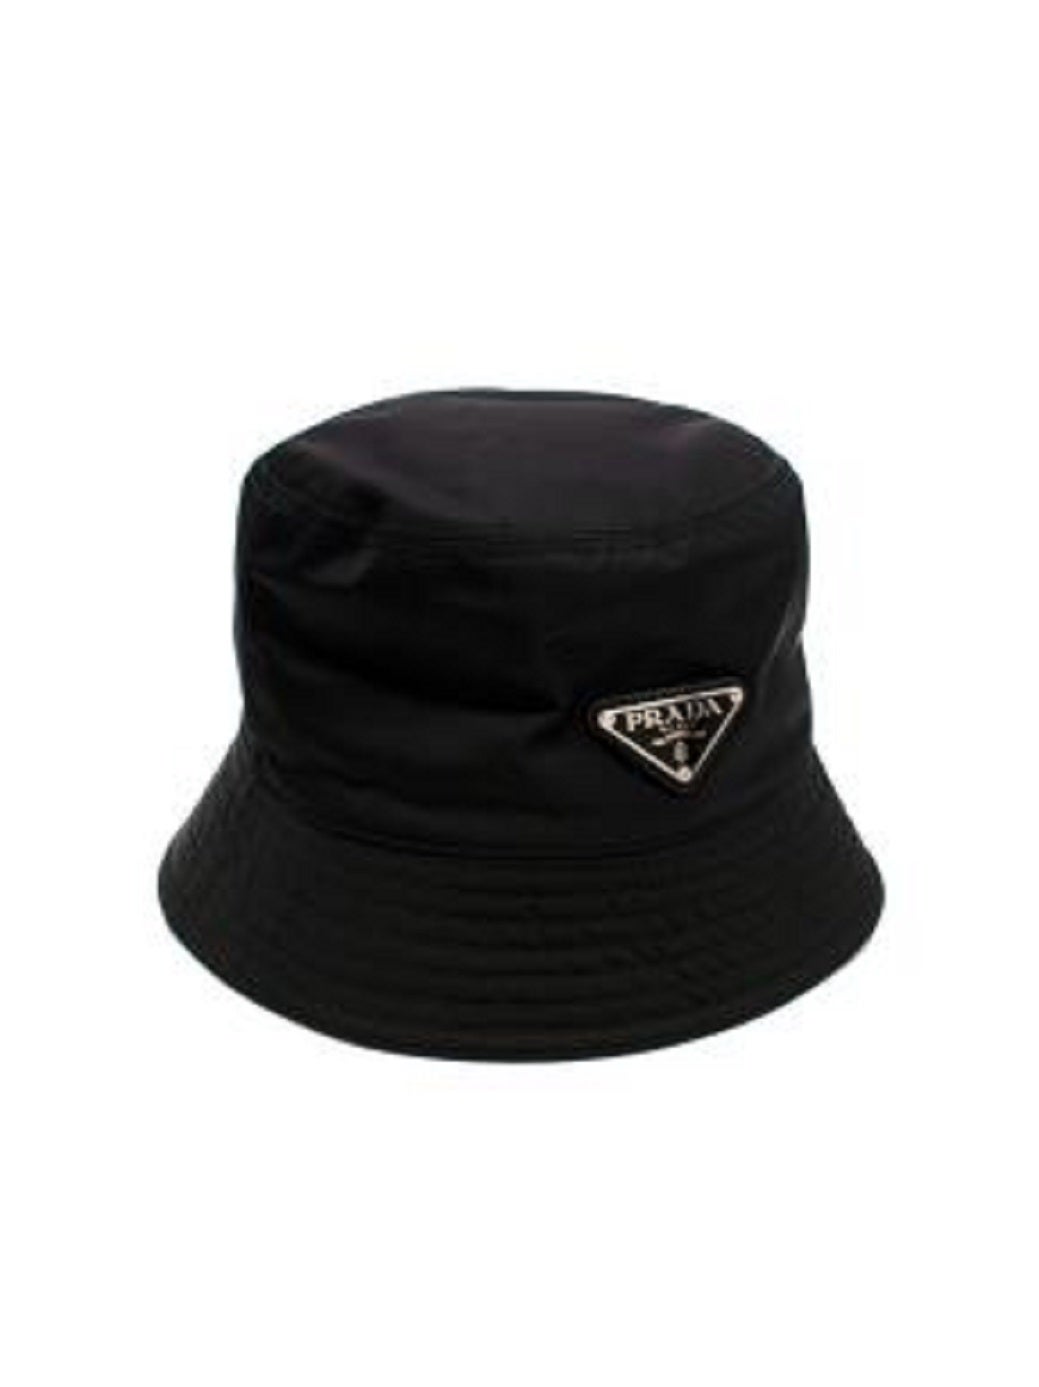 Prada Black Re-Nylon Bucket Hat - Size S